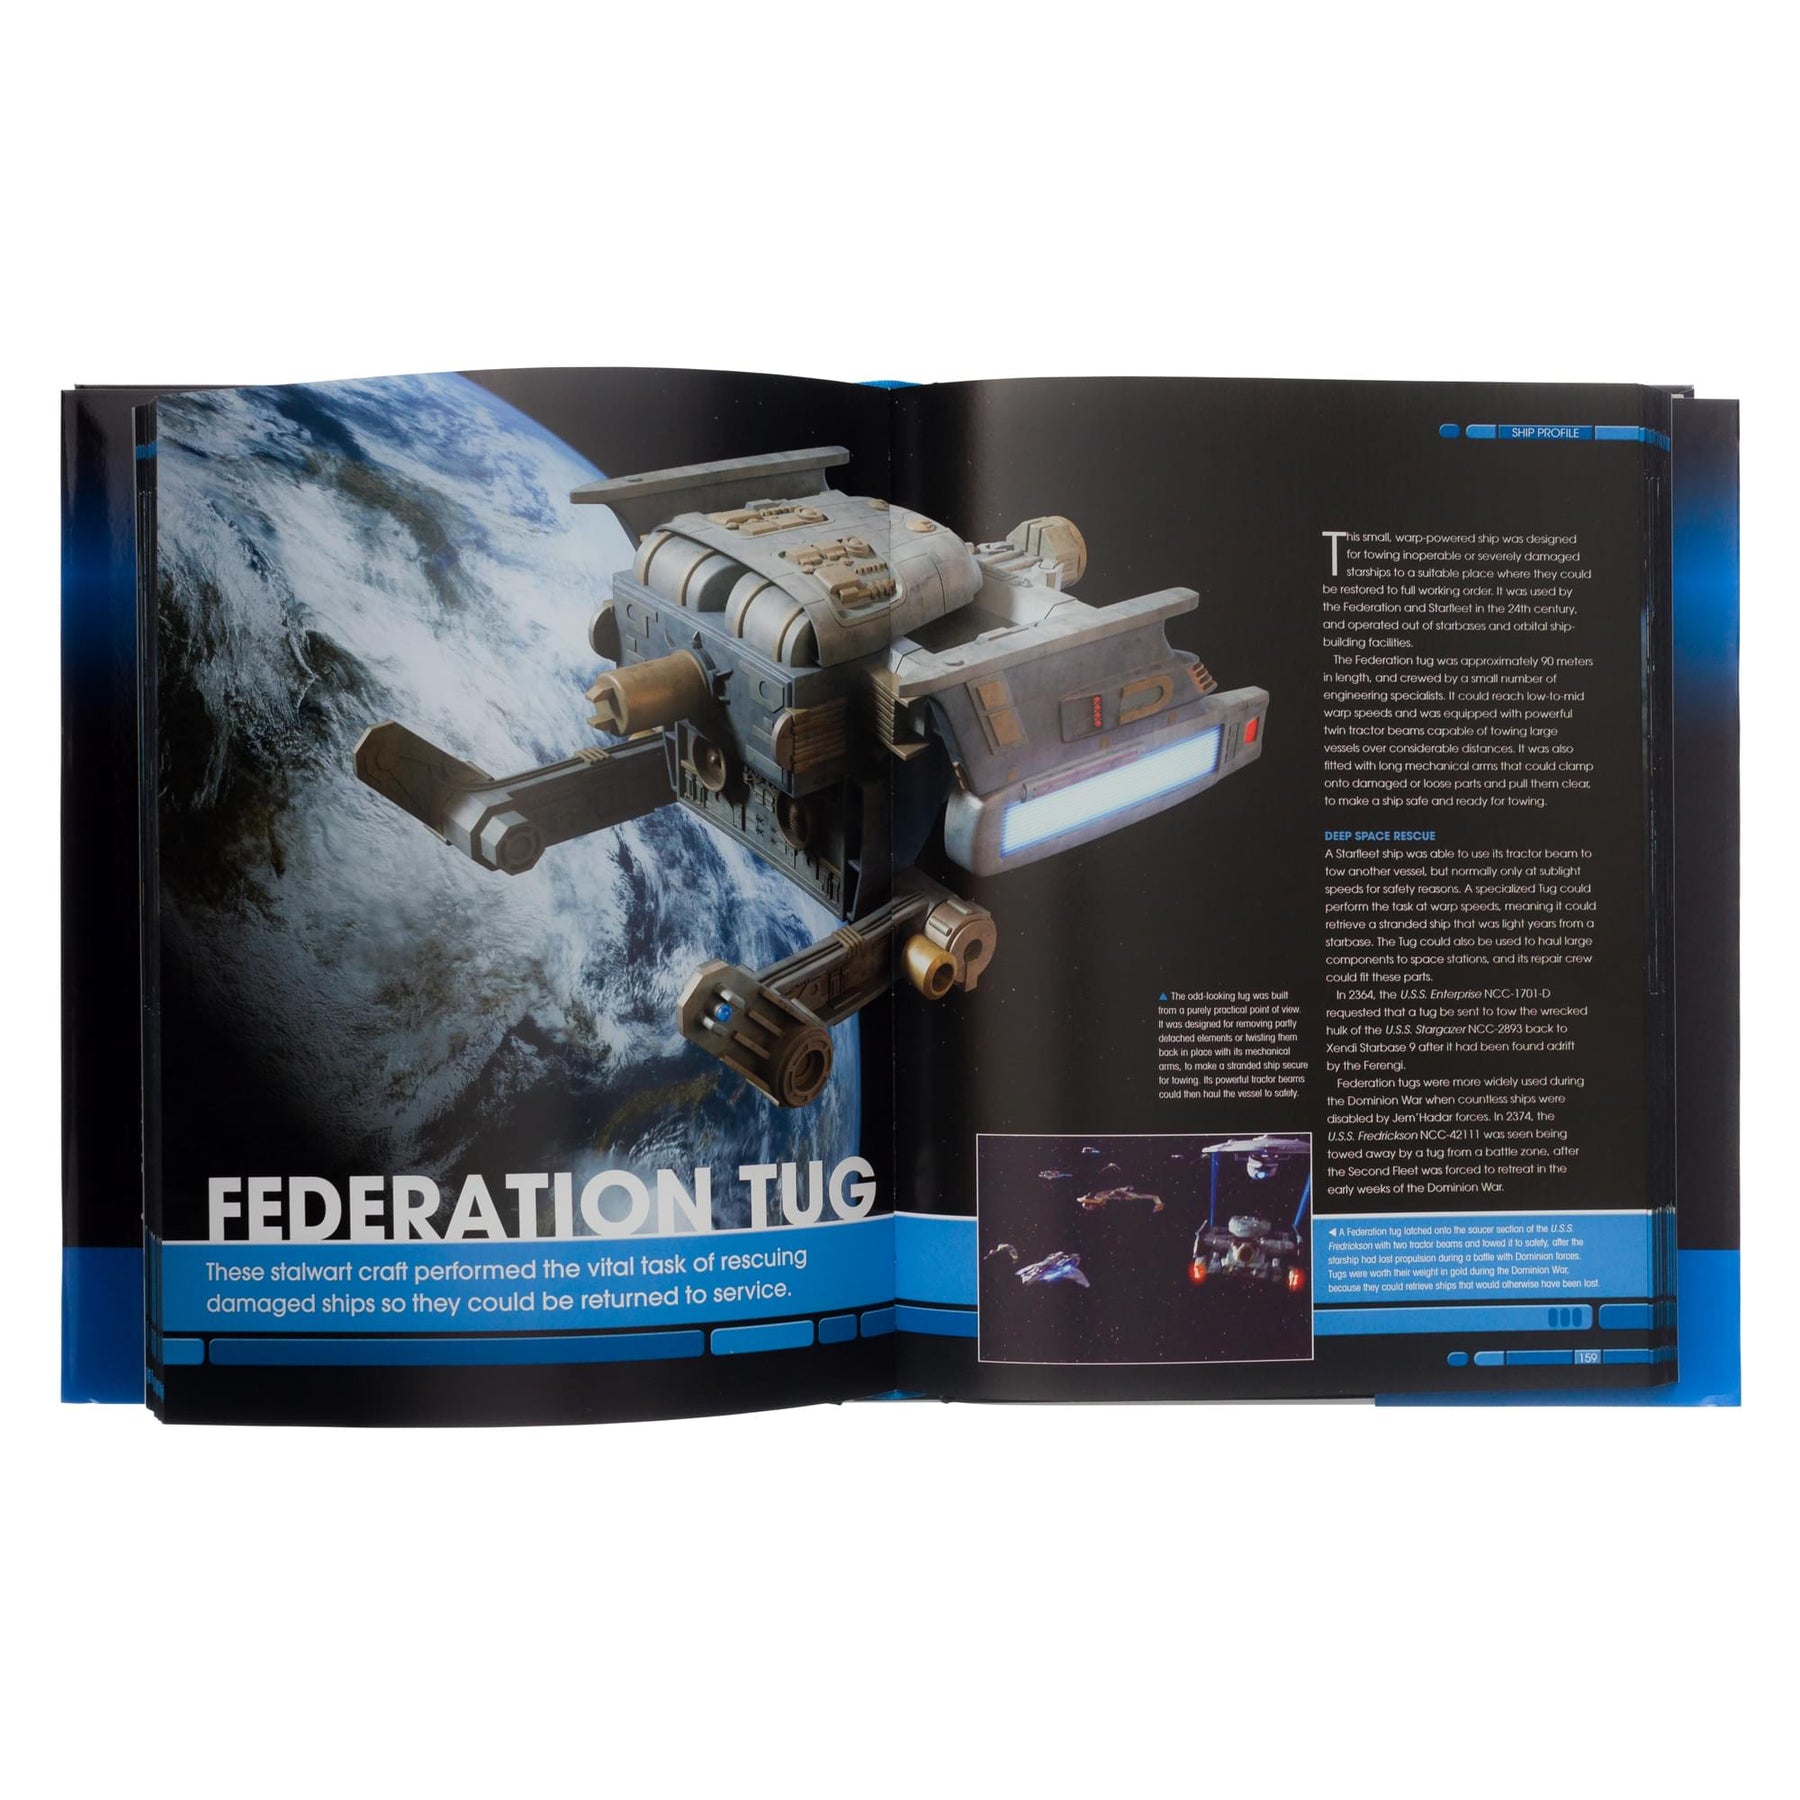 Star Trek Shipyards Book | Starfleet Starships 2294 - Future